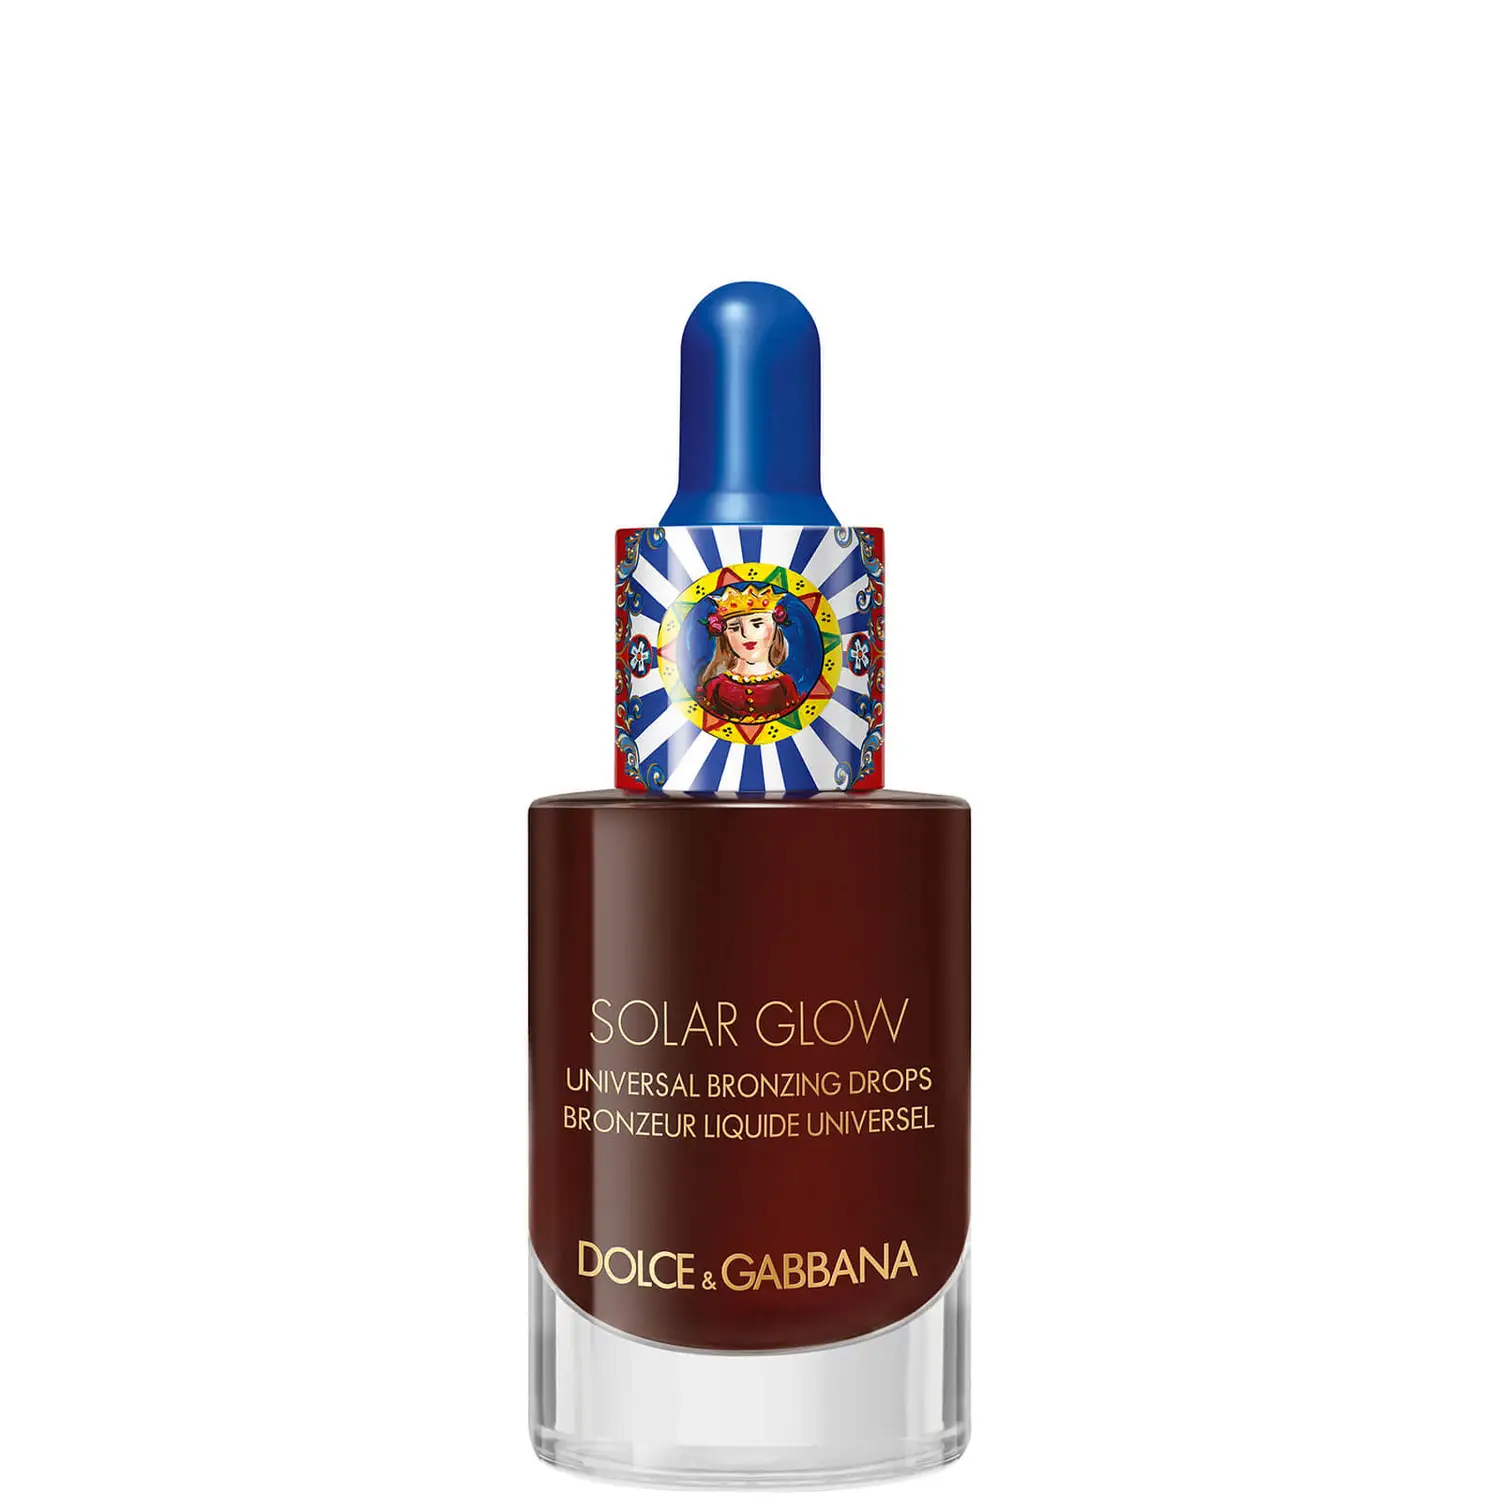 Dolce&Gabbana Solar Glow Universal Bronzing Drops 15ml